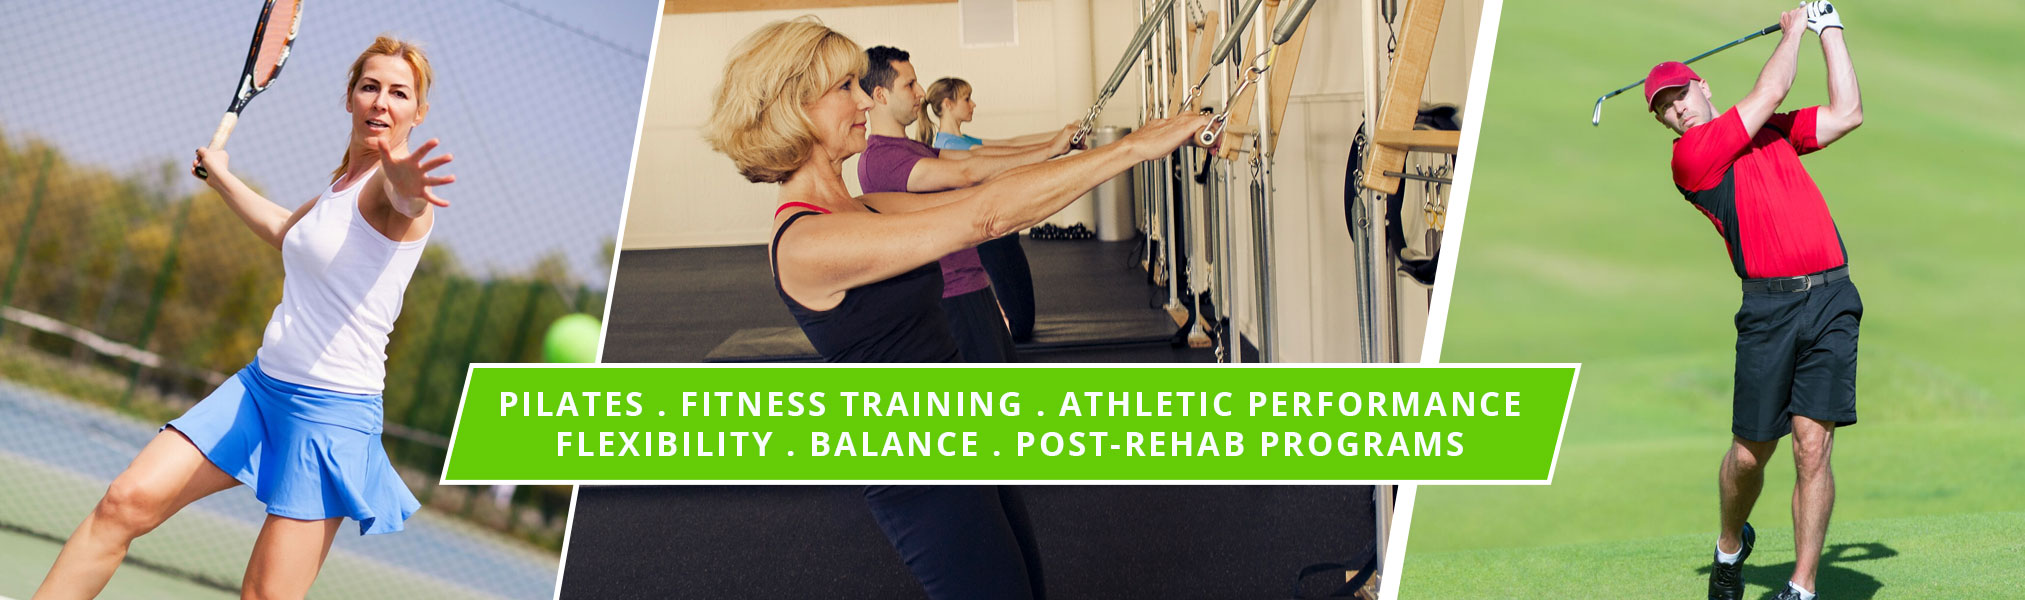 Pilates, Fitness Training, Athletic Performance, Flexibility, Balance, Post-rehab Programs